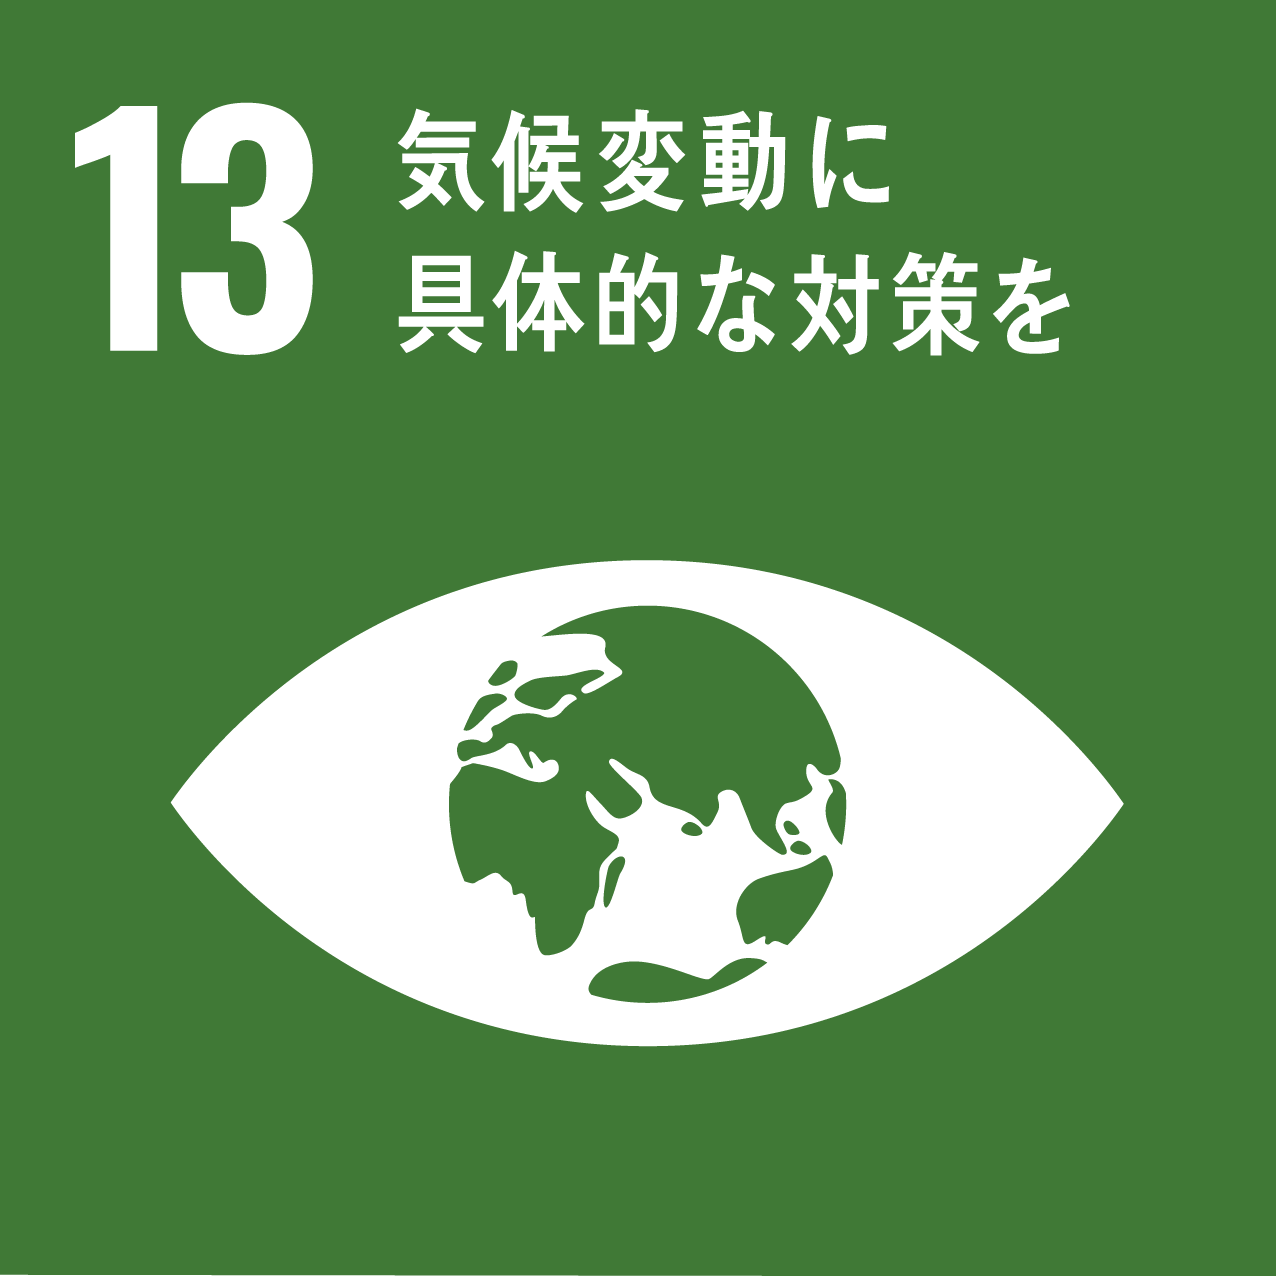 Japan_SDGs_13